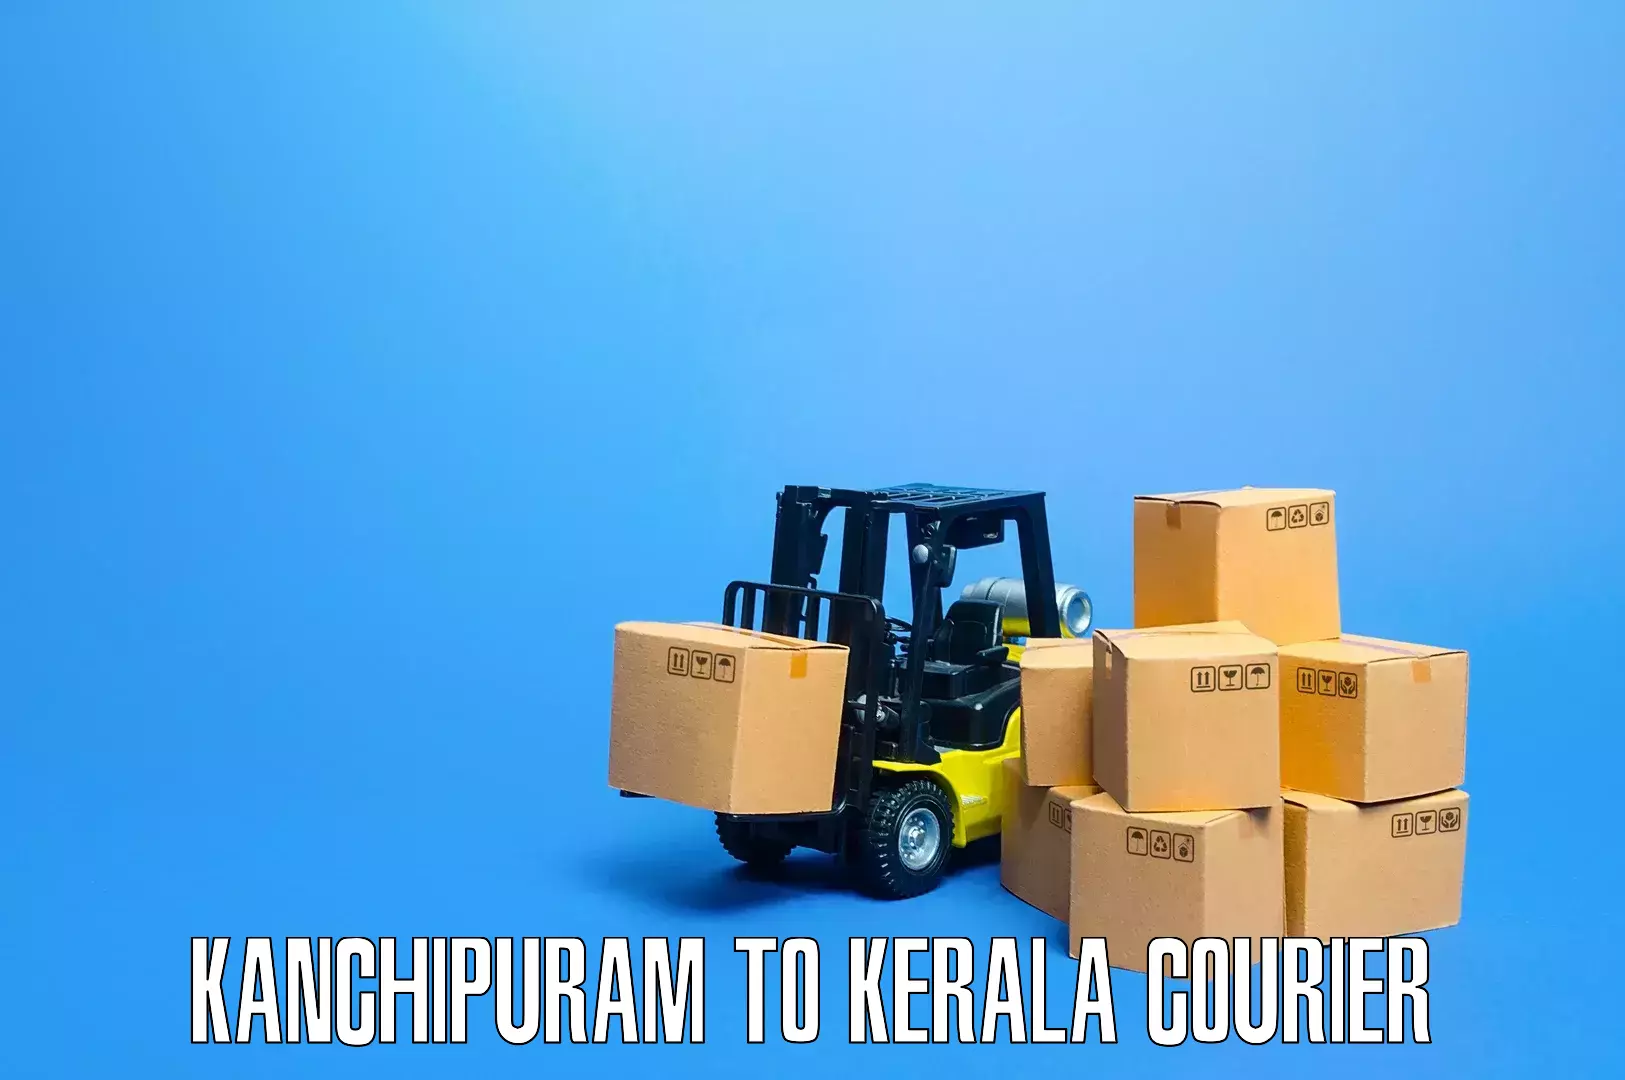 Professional moving assistance Kanchipuram to Kerala